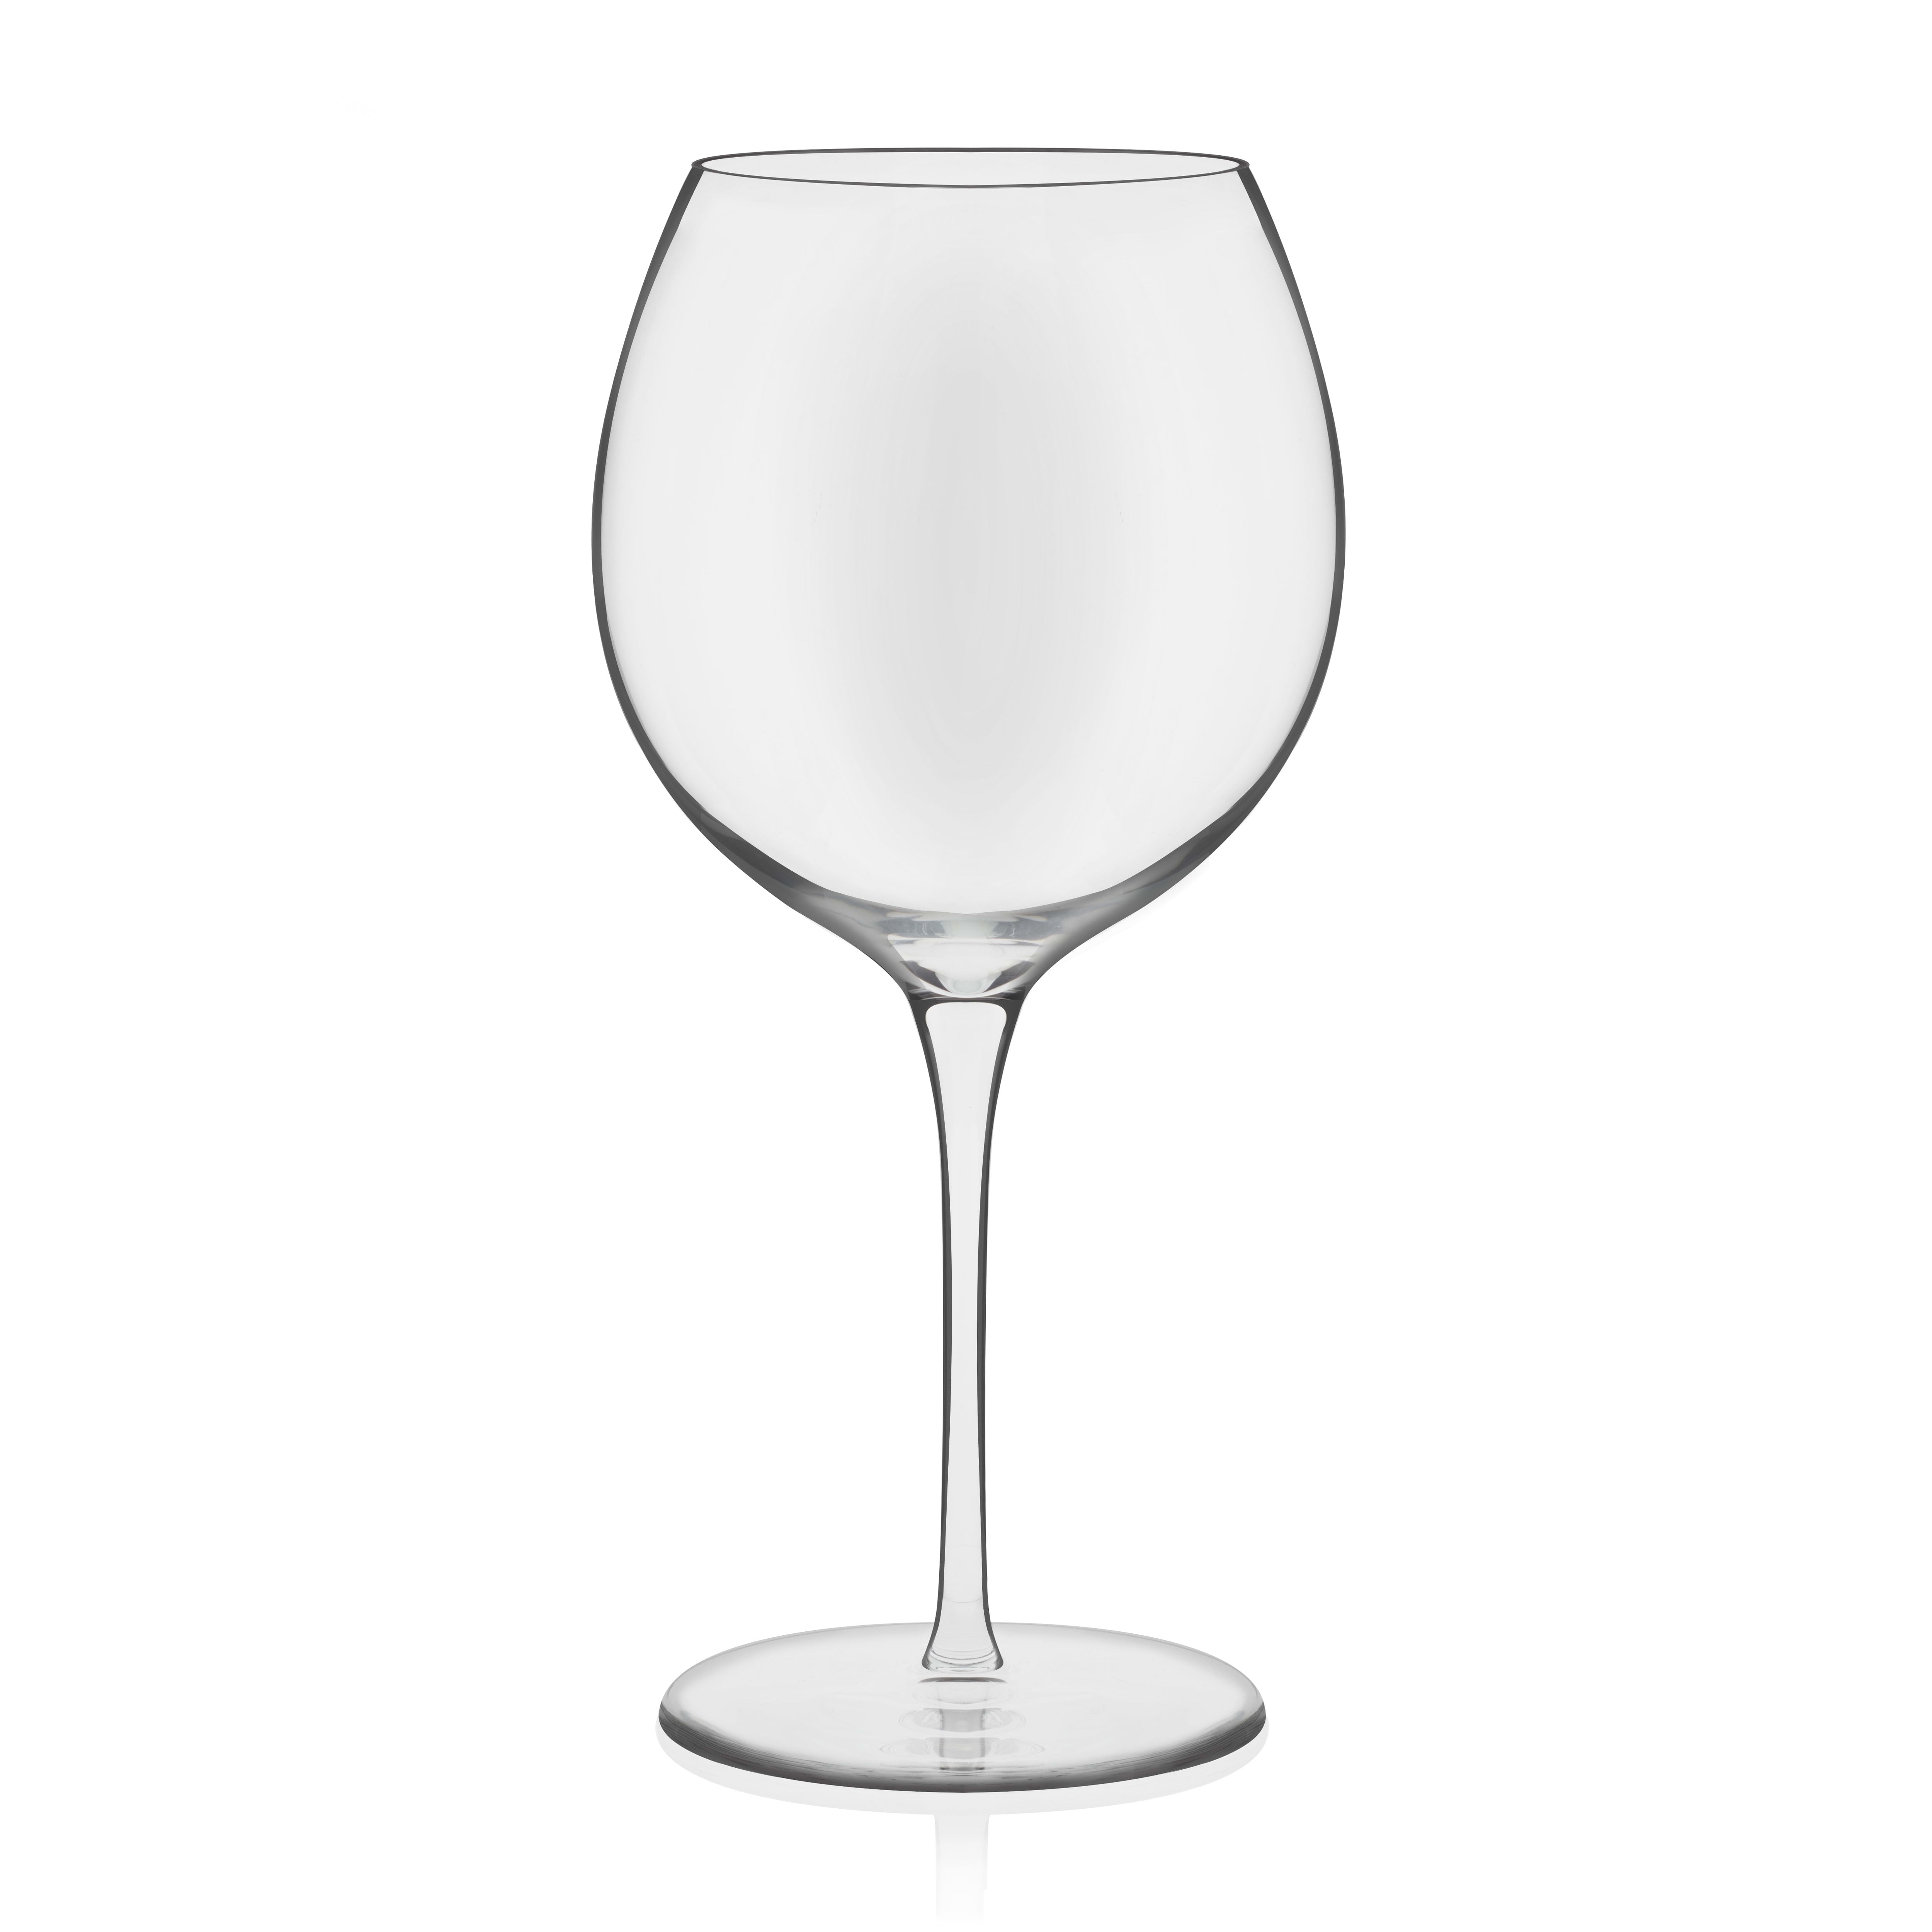 Libbey Vineyard Reserve 12pc Wine Glass Set : Target